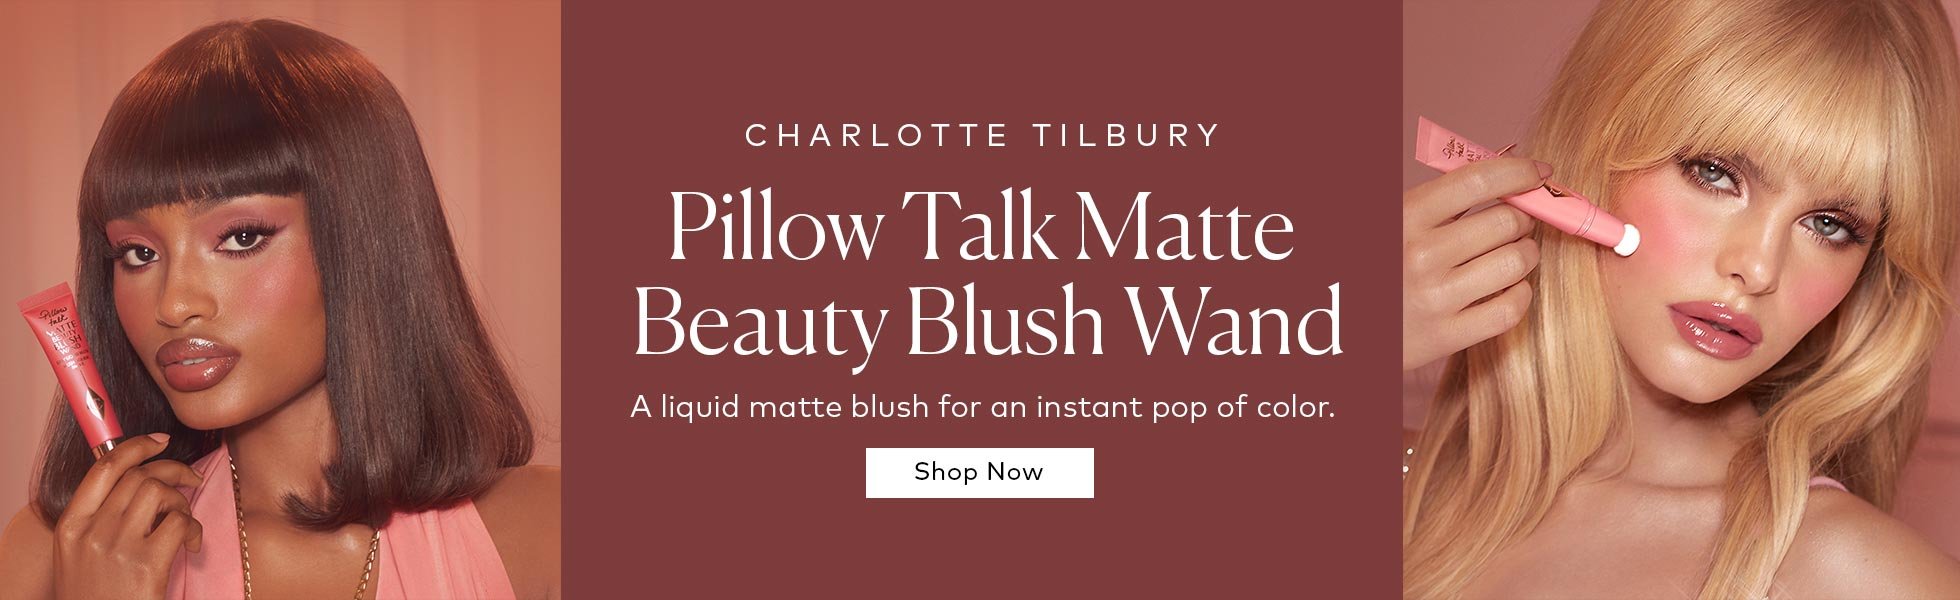 Shop the Charlotte Tilbury Pillow Talk Matte Beauty Blush Wand on Beautylish.com! 